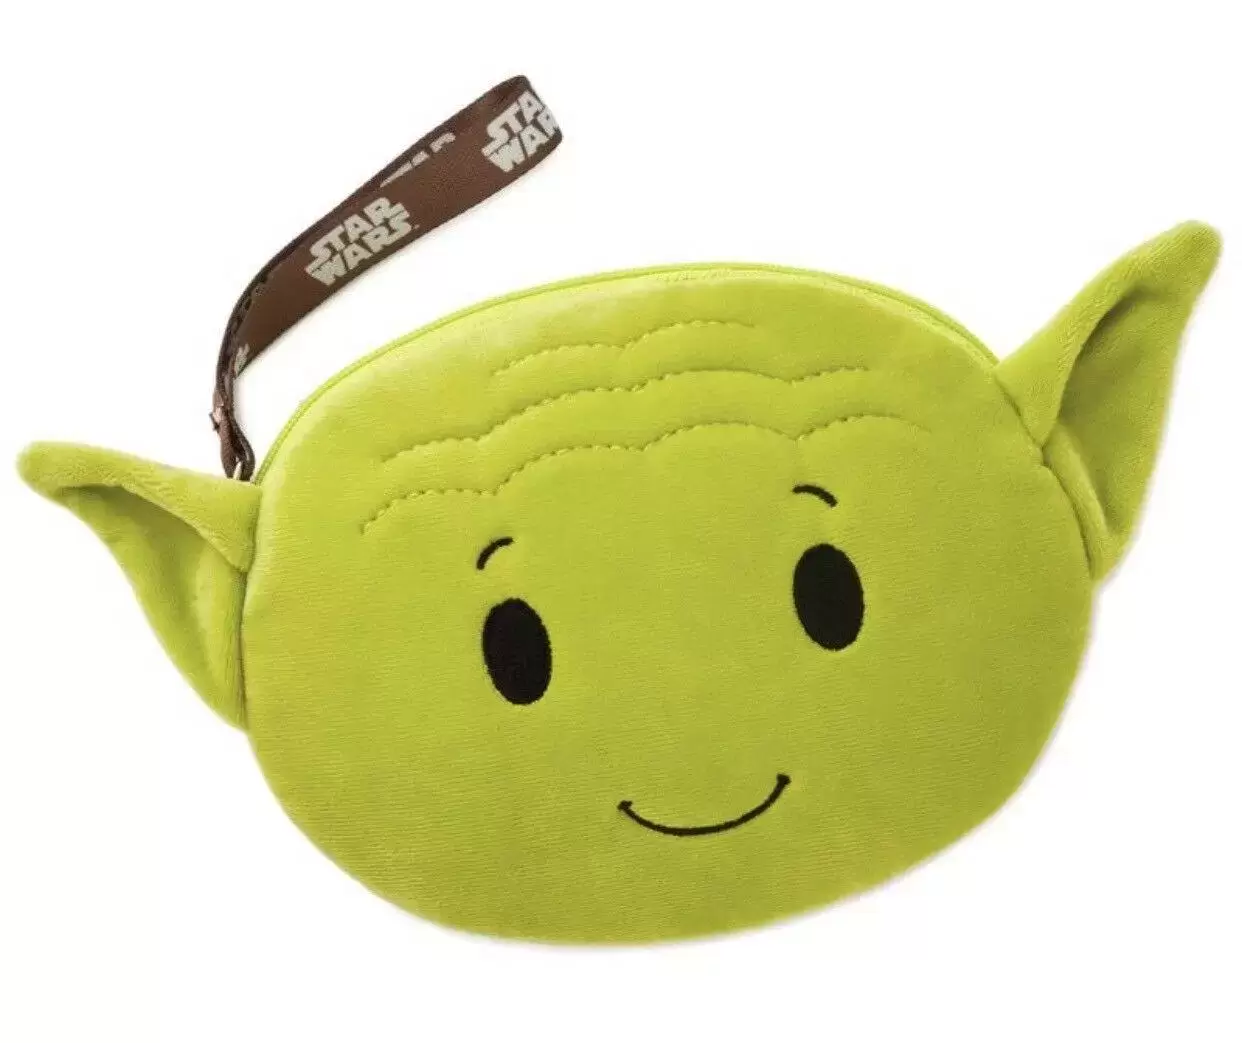 Star Wars - Yoda (Zipper Pouch)